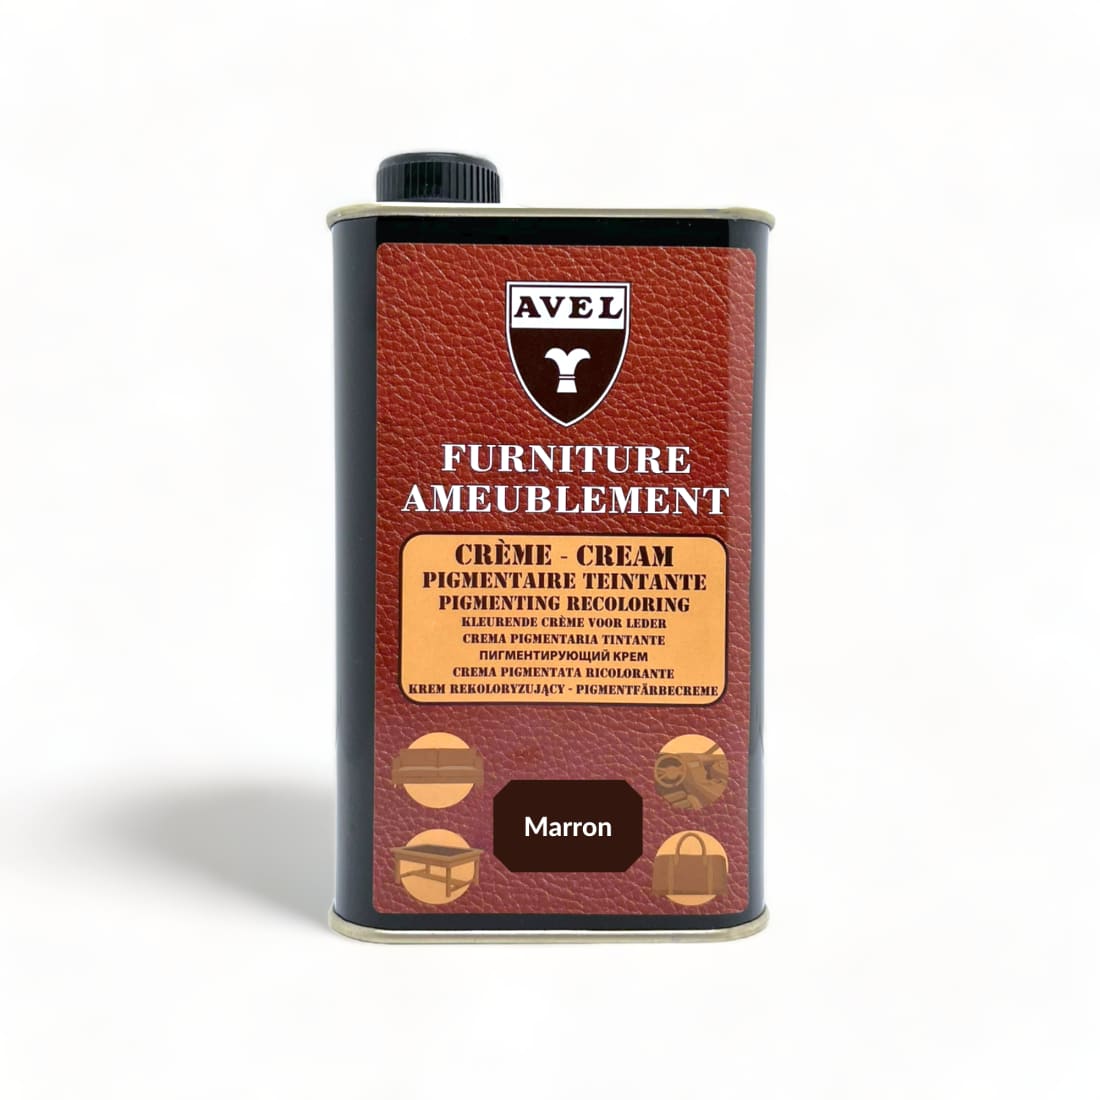 Crème Pigmentaire Teintante Marron - Avel - 375 ml -